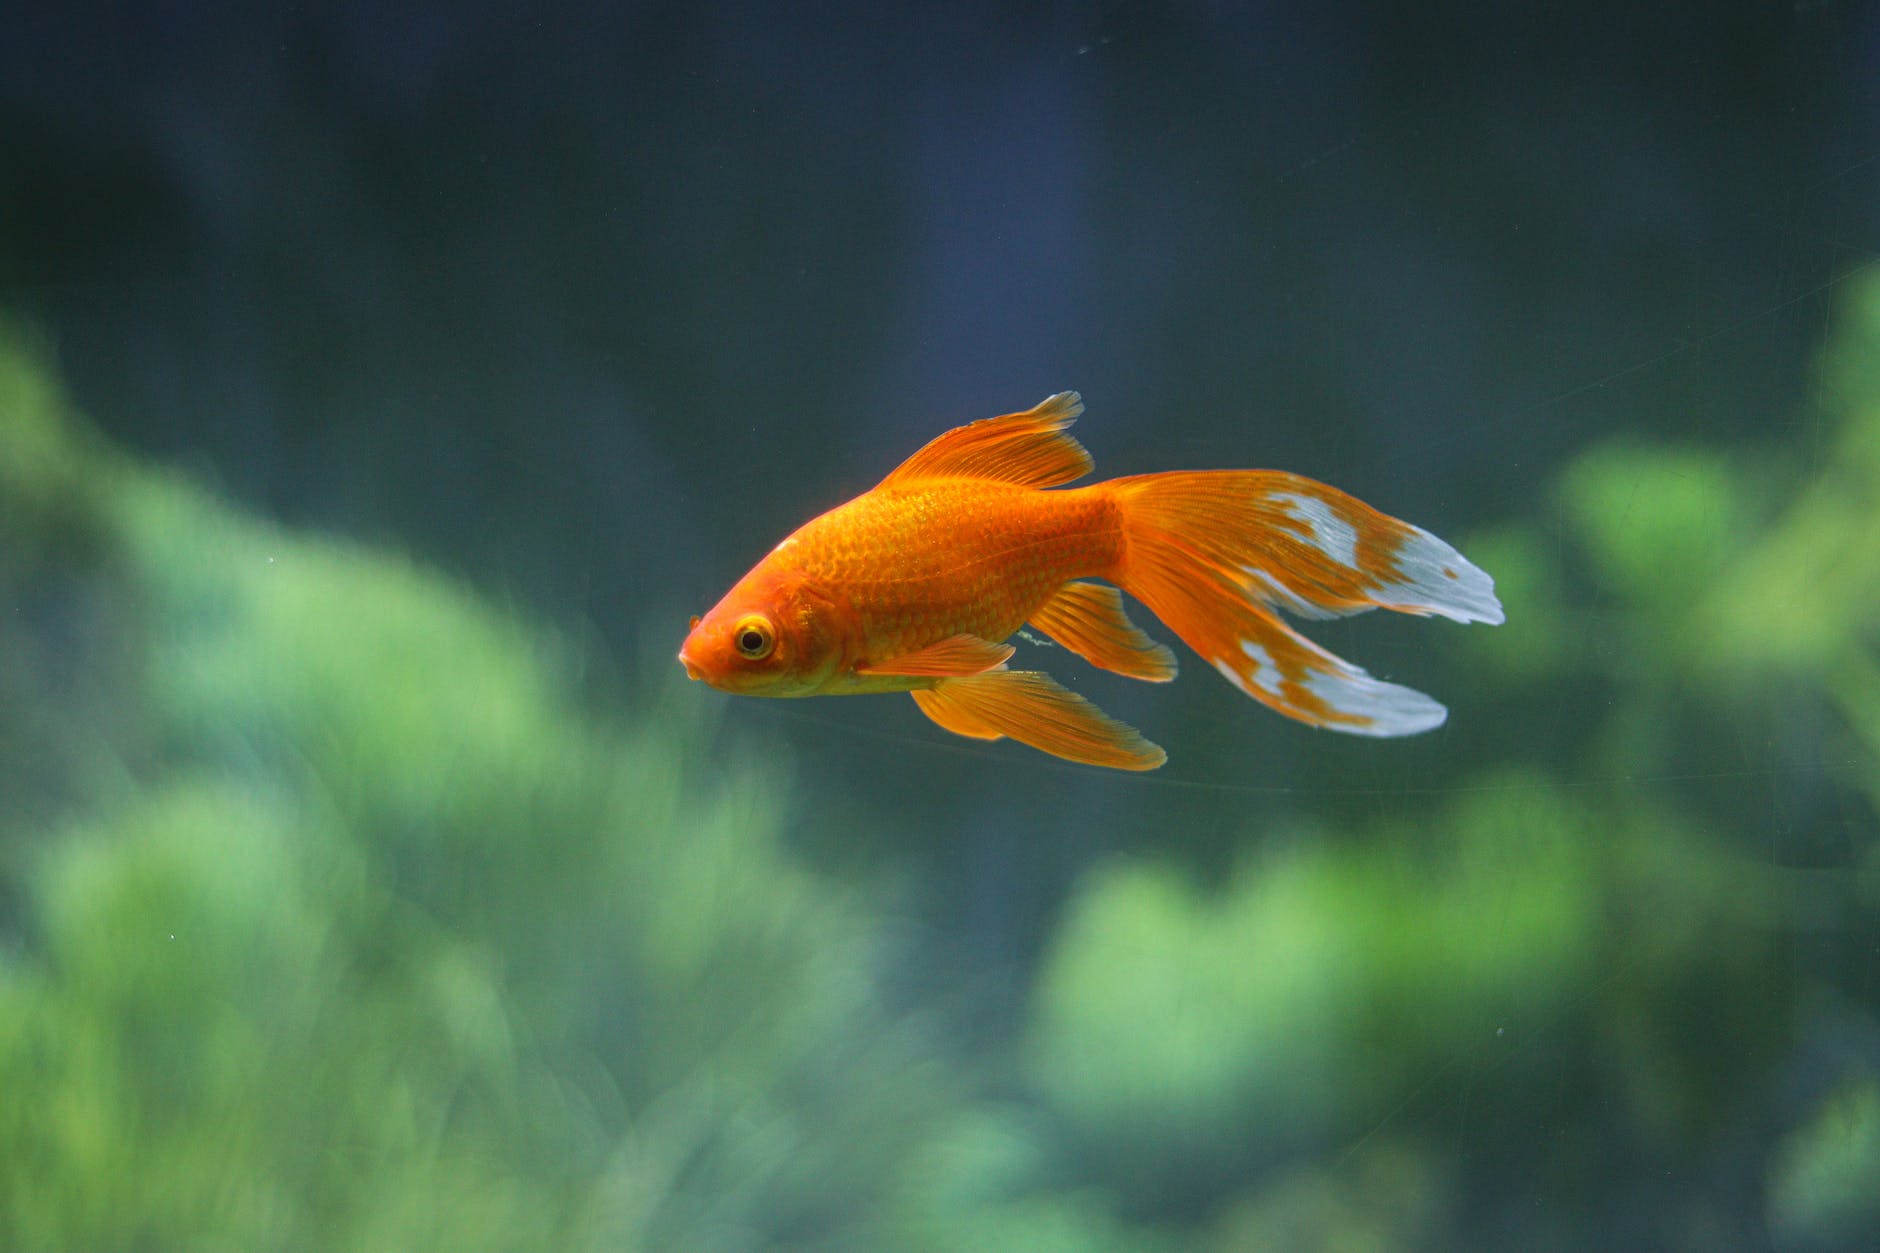 close up photo of a goldfish swimming underwater